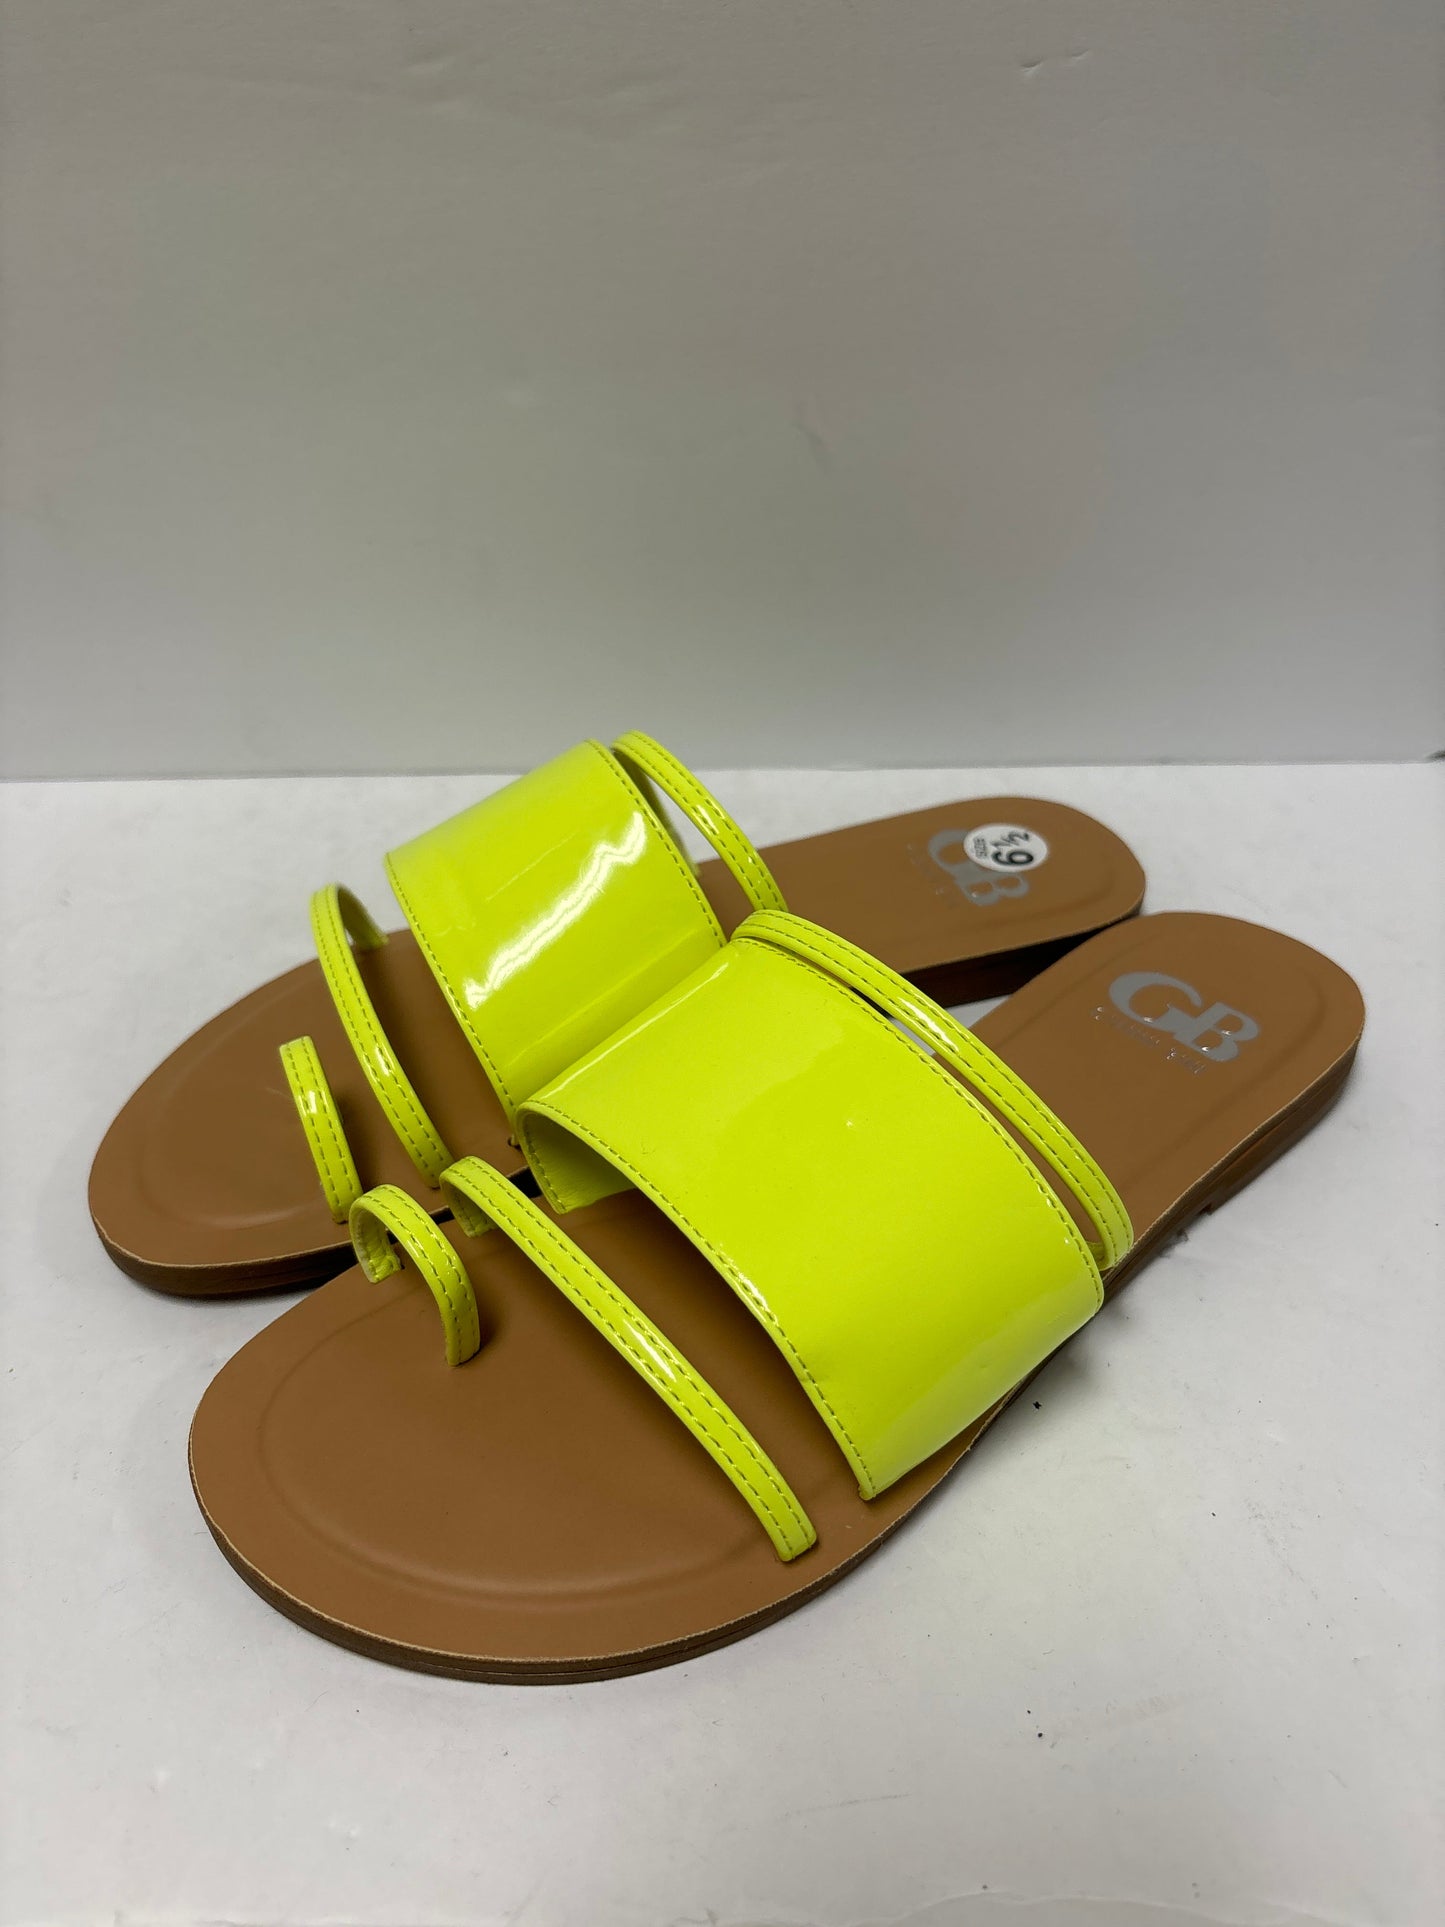 Yellow Sandals Flats Gianni Bini, Size 6.5